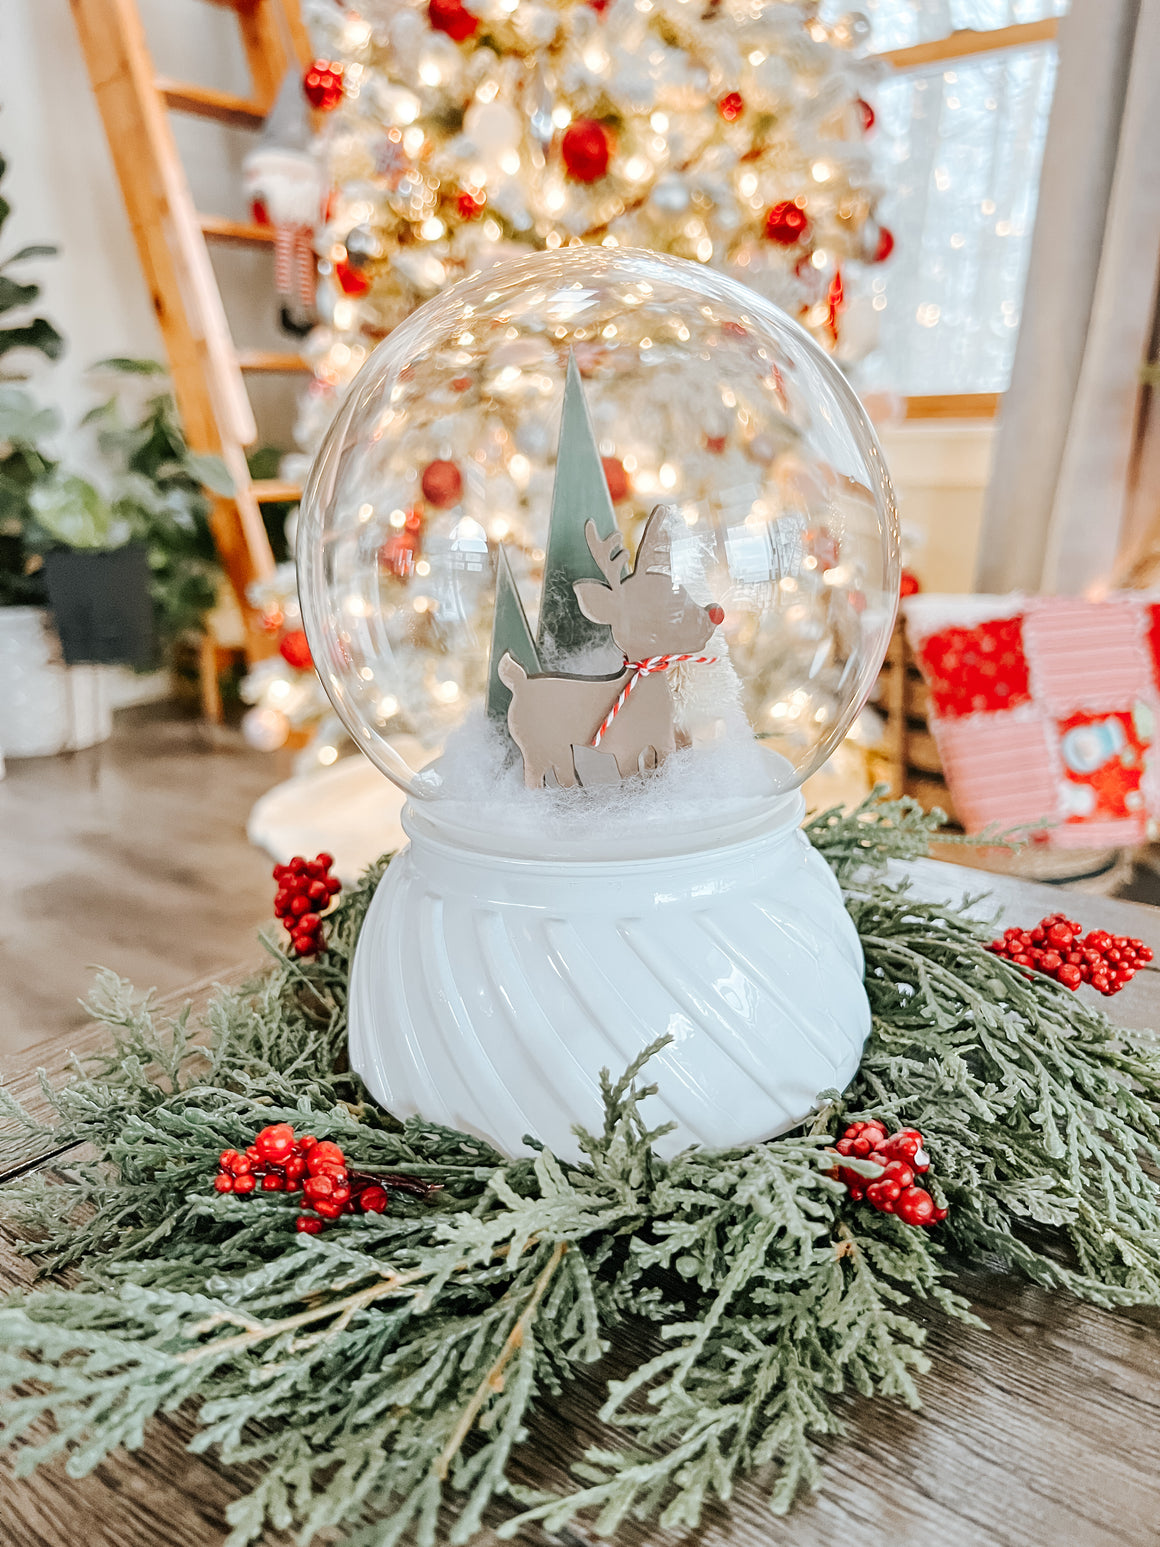 DIY Snow globe Kits | Reindeer w Trees | Compatible wit Target Dollar Spot snow globe